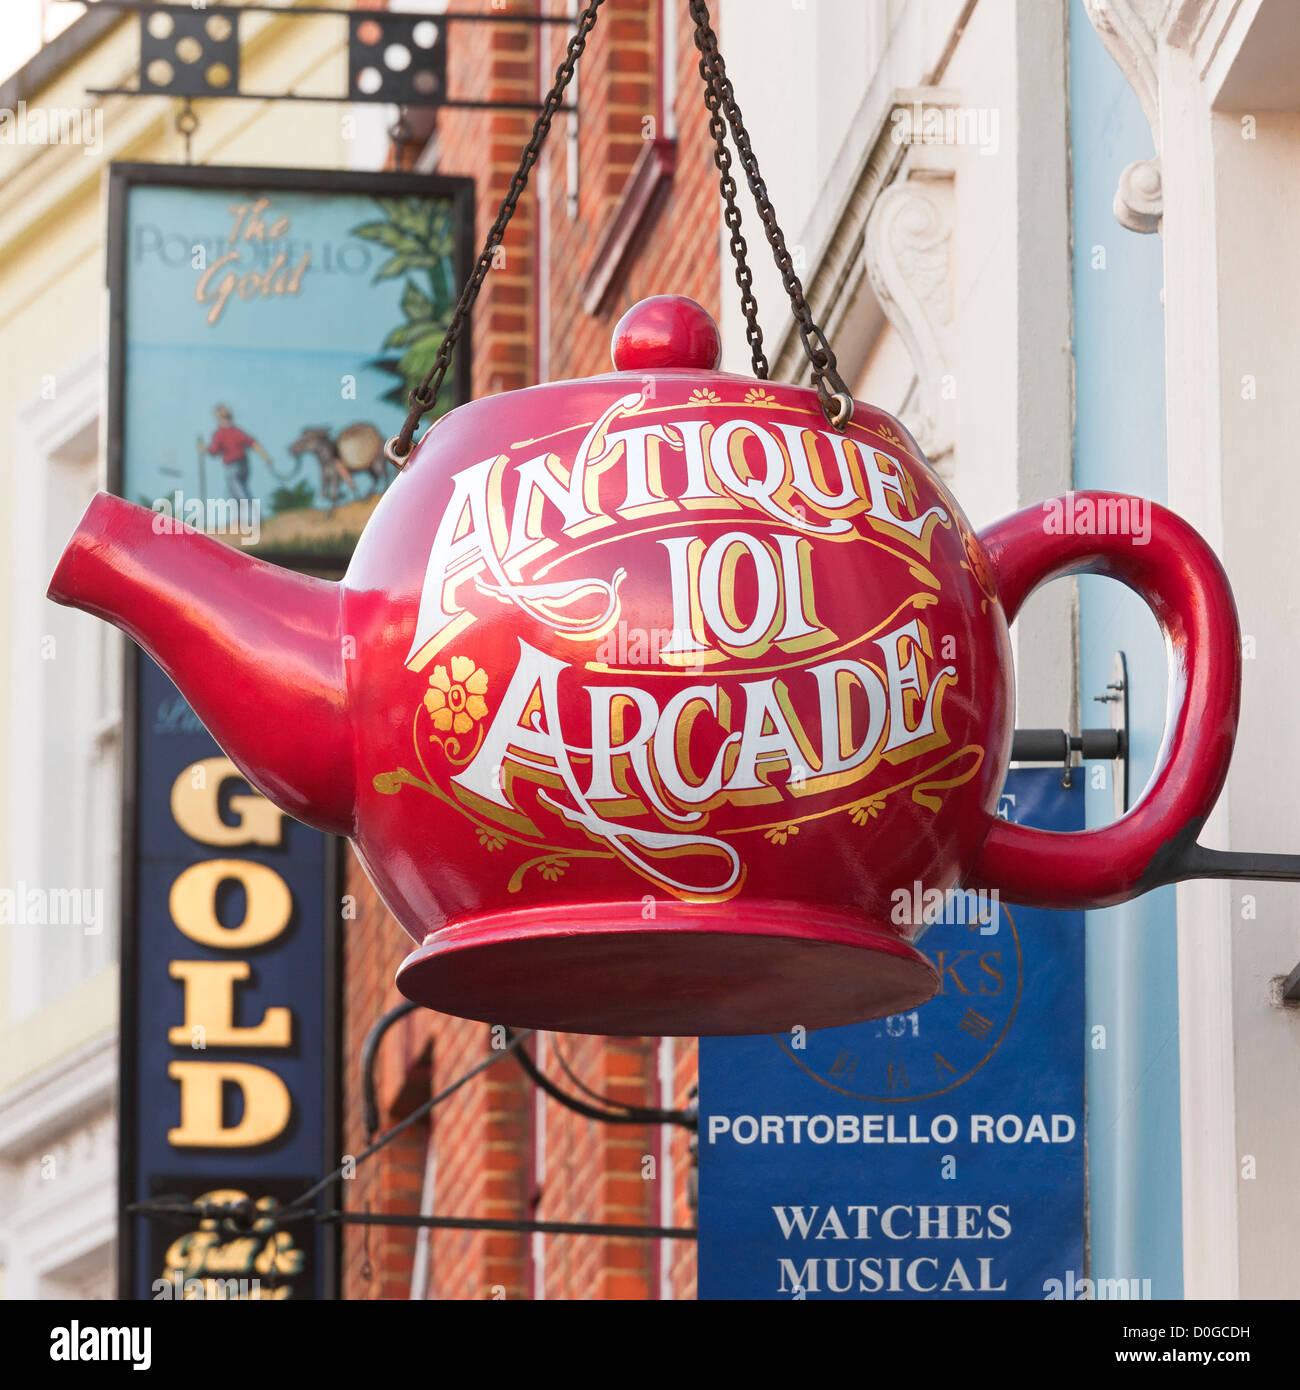 London, Portobello Road, Notting Hill. Big red teapot shop sign for antiques mall the Antique 101 Arcade on Portobello Rd. Stock Photo